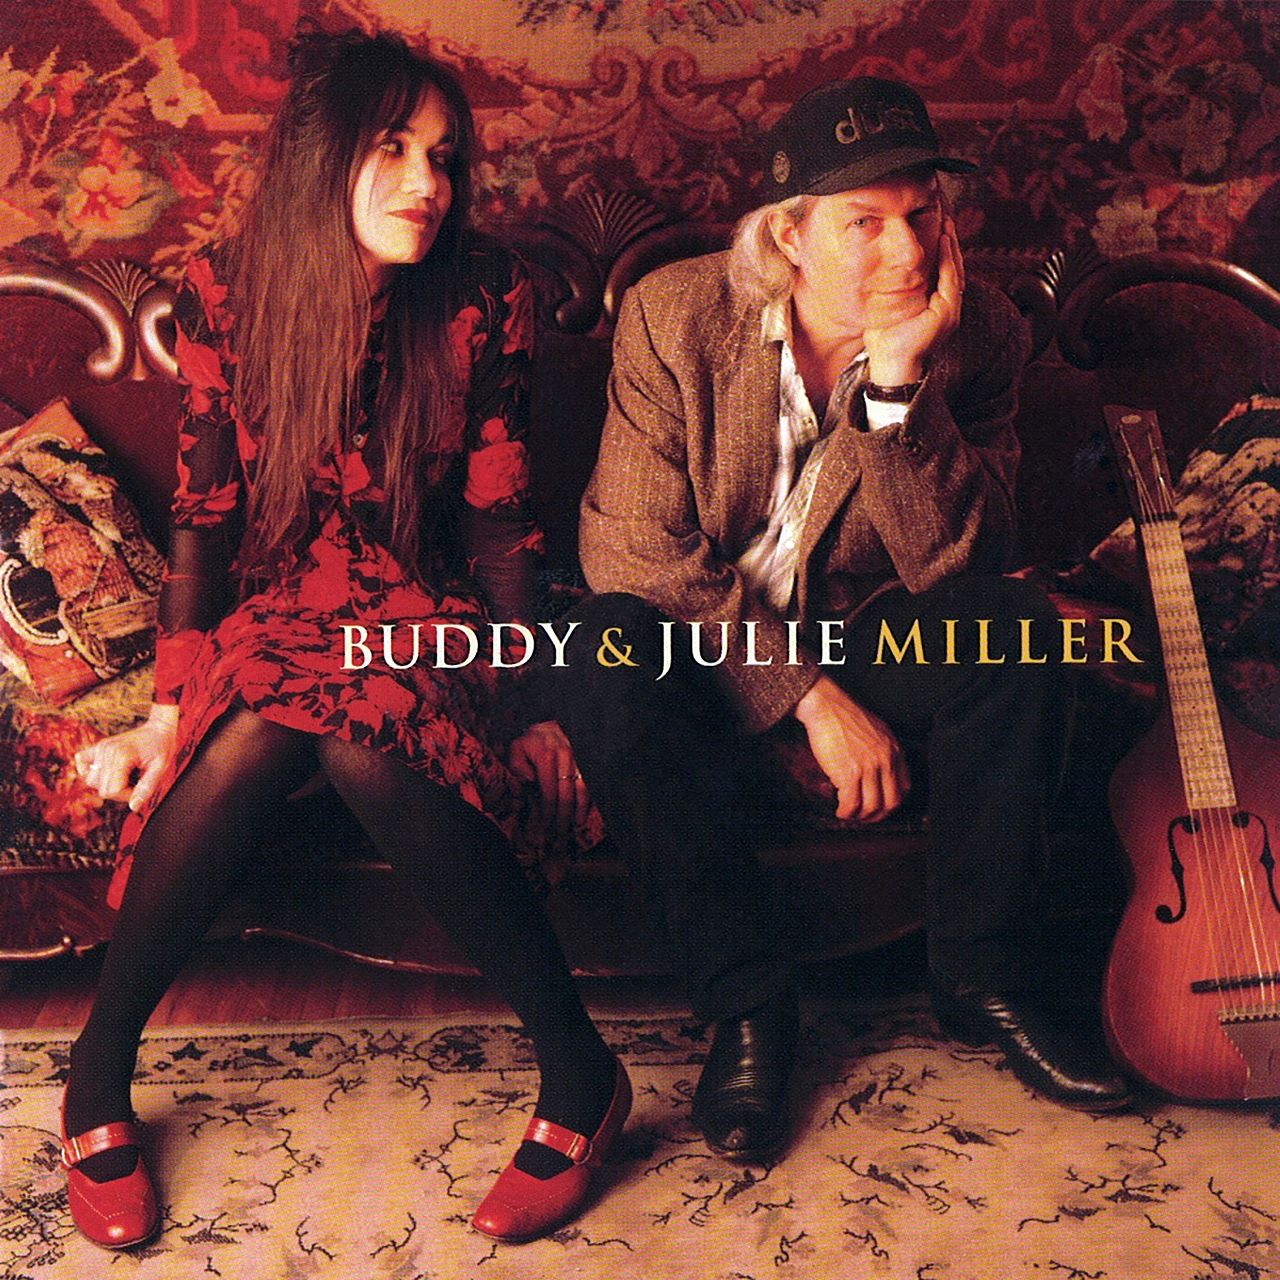 Buddy & Julie Miller - Buddy & Julie Miller cover album